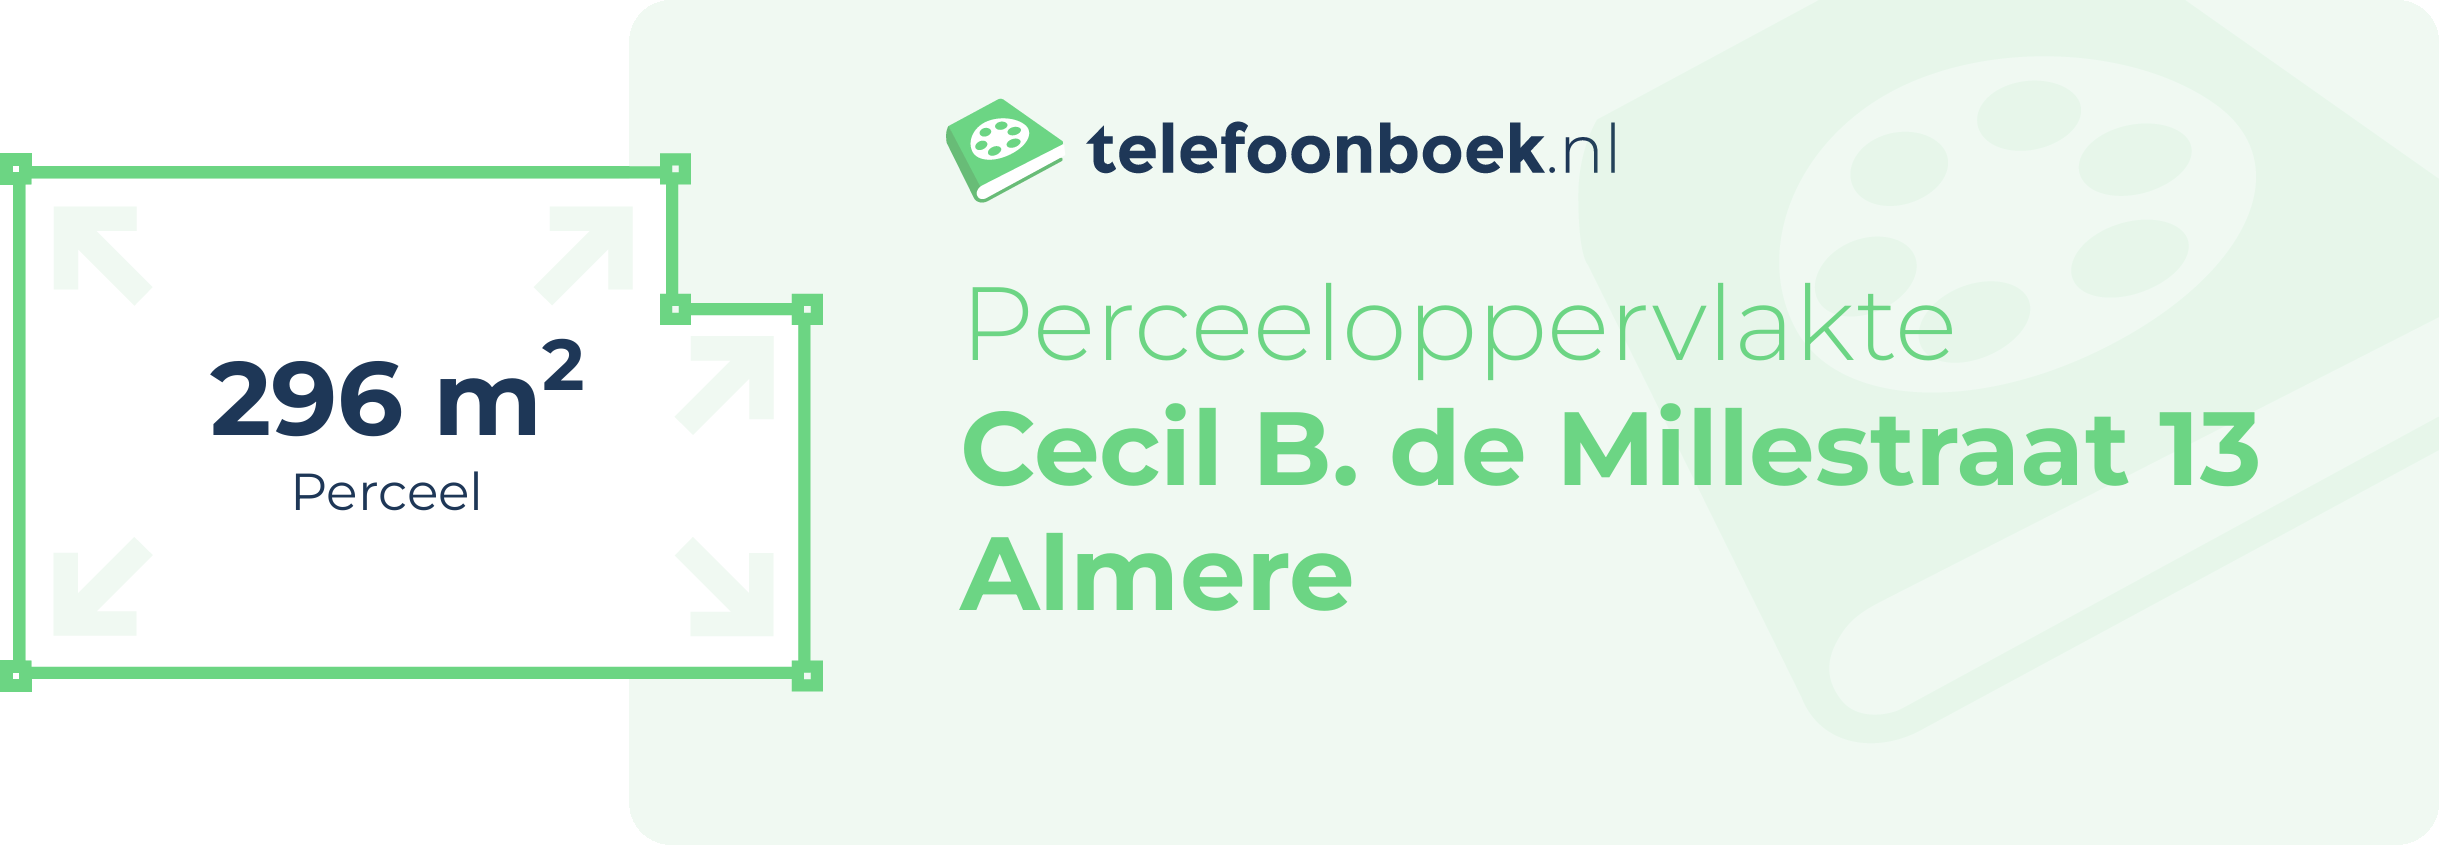 Perceeloppervlakte Cecil B. De Millestraat 13 Almere